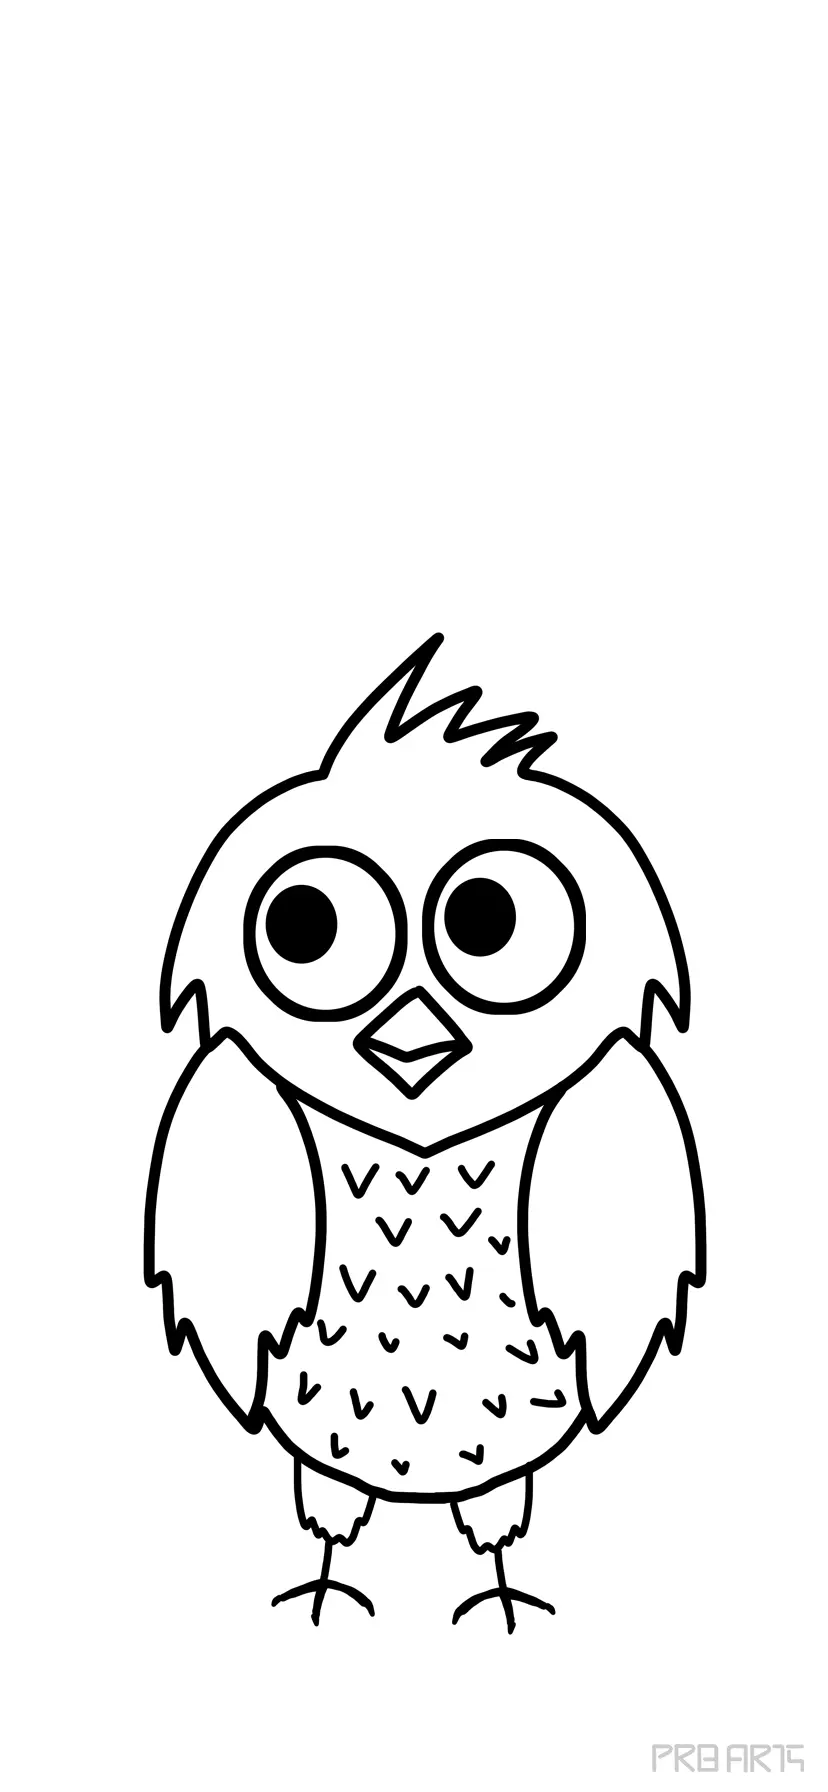 easy owl drawings for kids